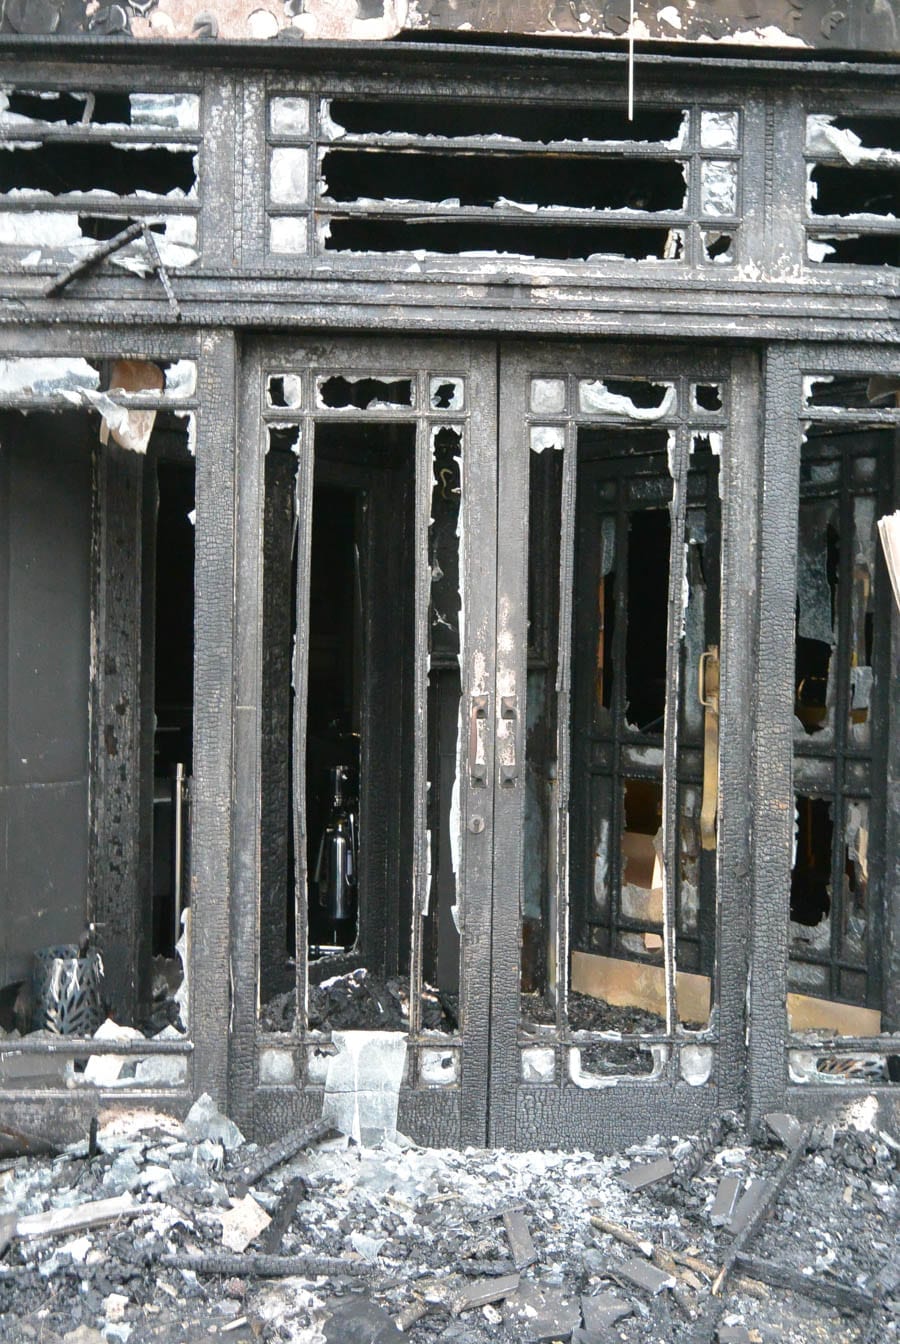 Caramelized – Former La Brasserie (now Caramel) suffers fire – Frontage of former La Brasserie premises in South Kensington – now Caramel – burnt to a crisp on morning of 6th December 2018.